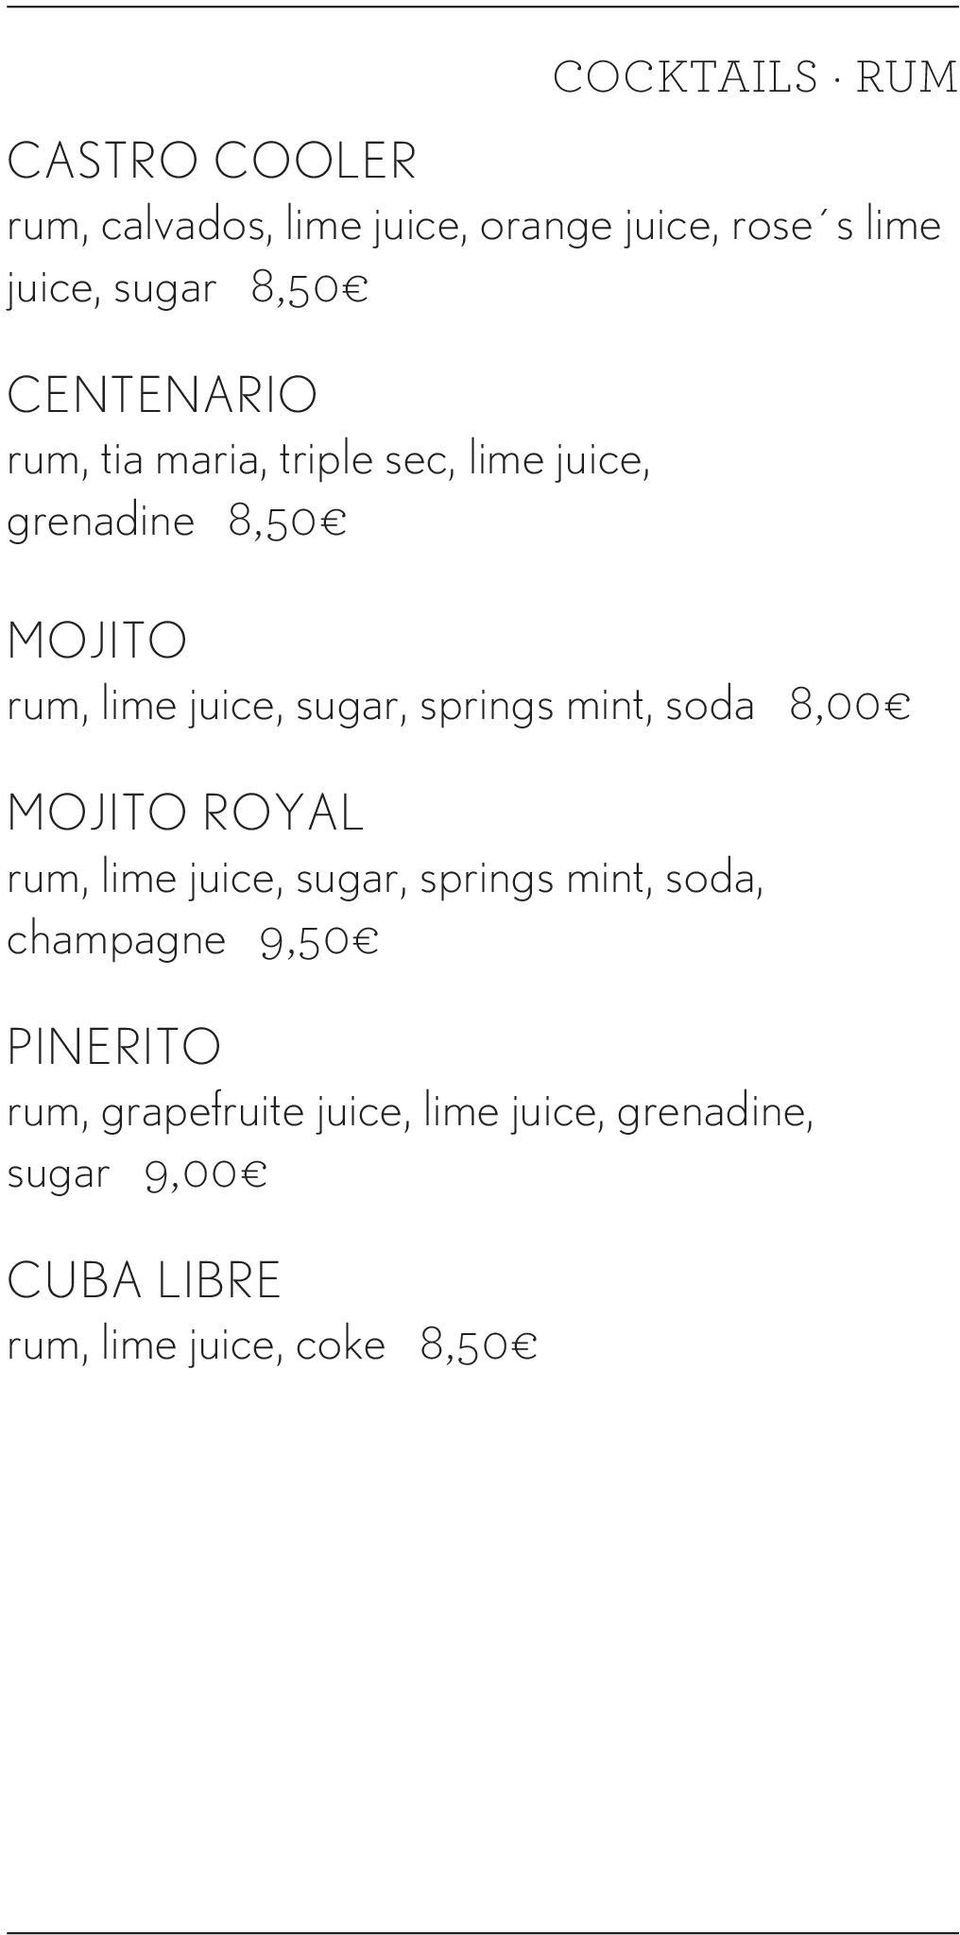 mint, soda 8,00 Mojito Royal rum, lime juice, sugar, springs mint, soda, champagne 9,50 PINERITO